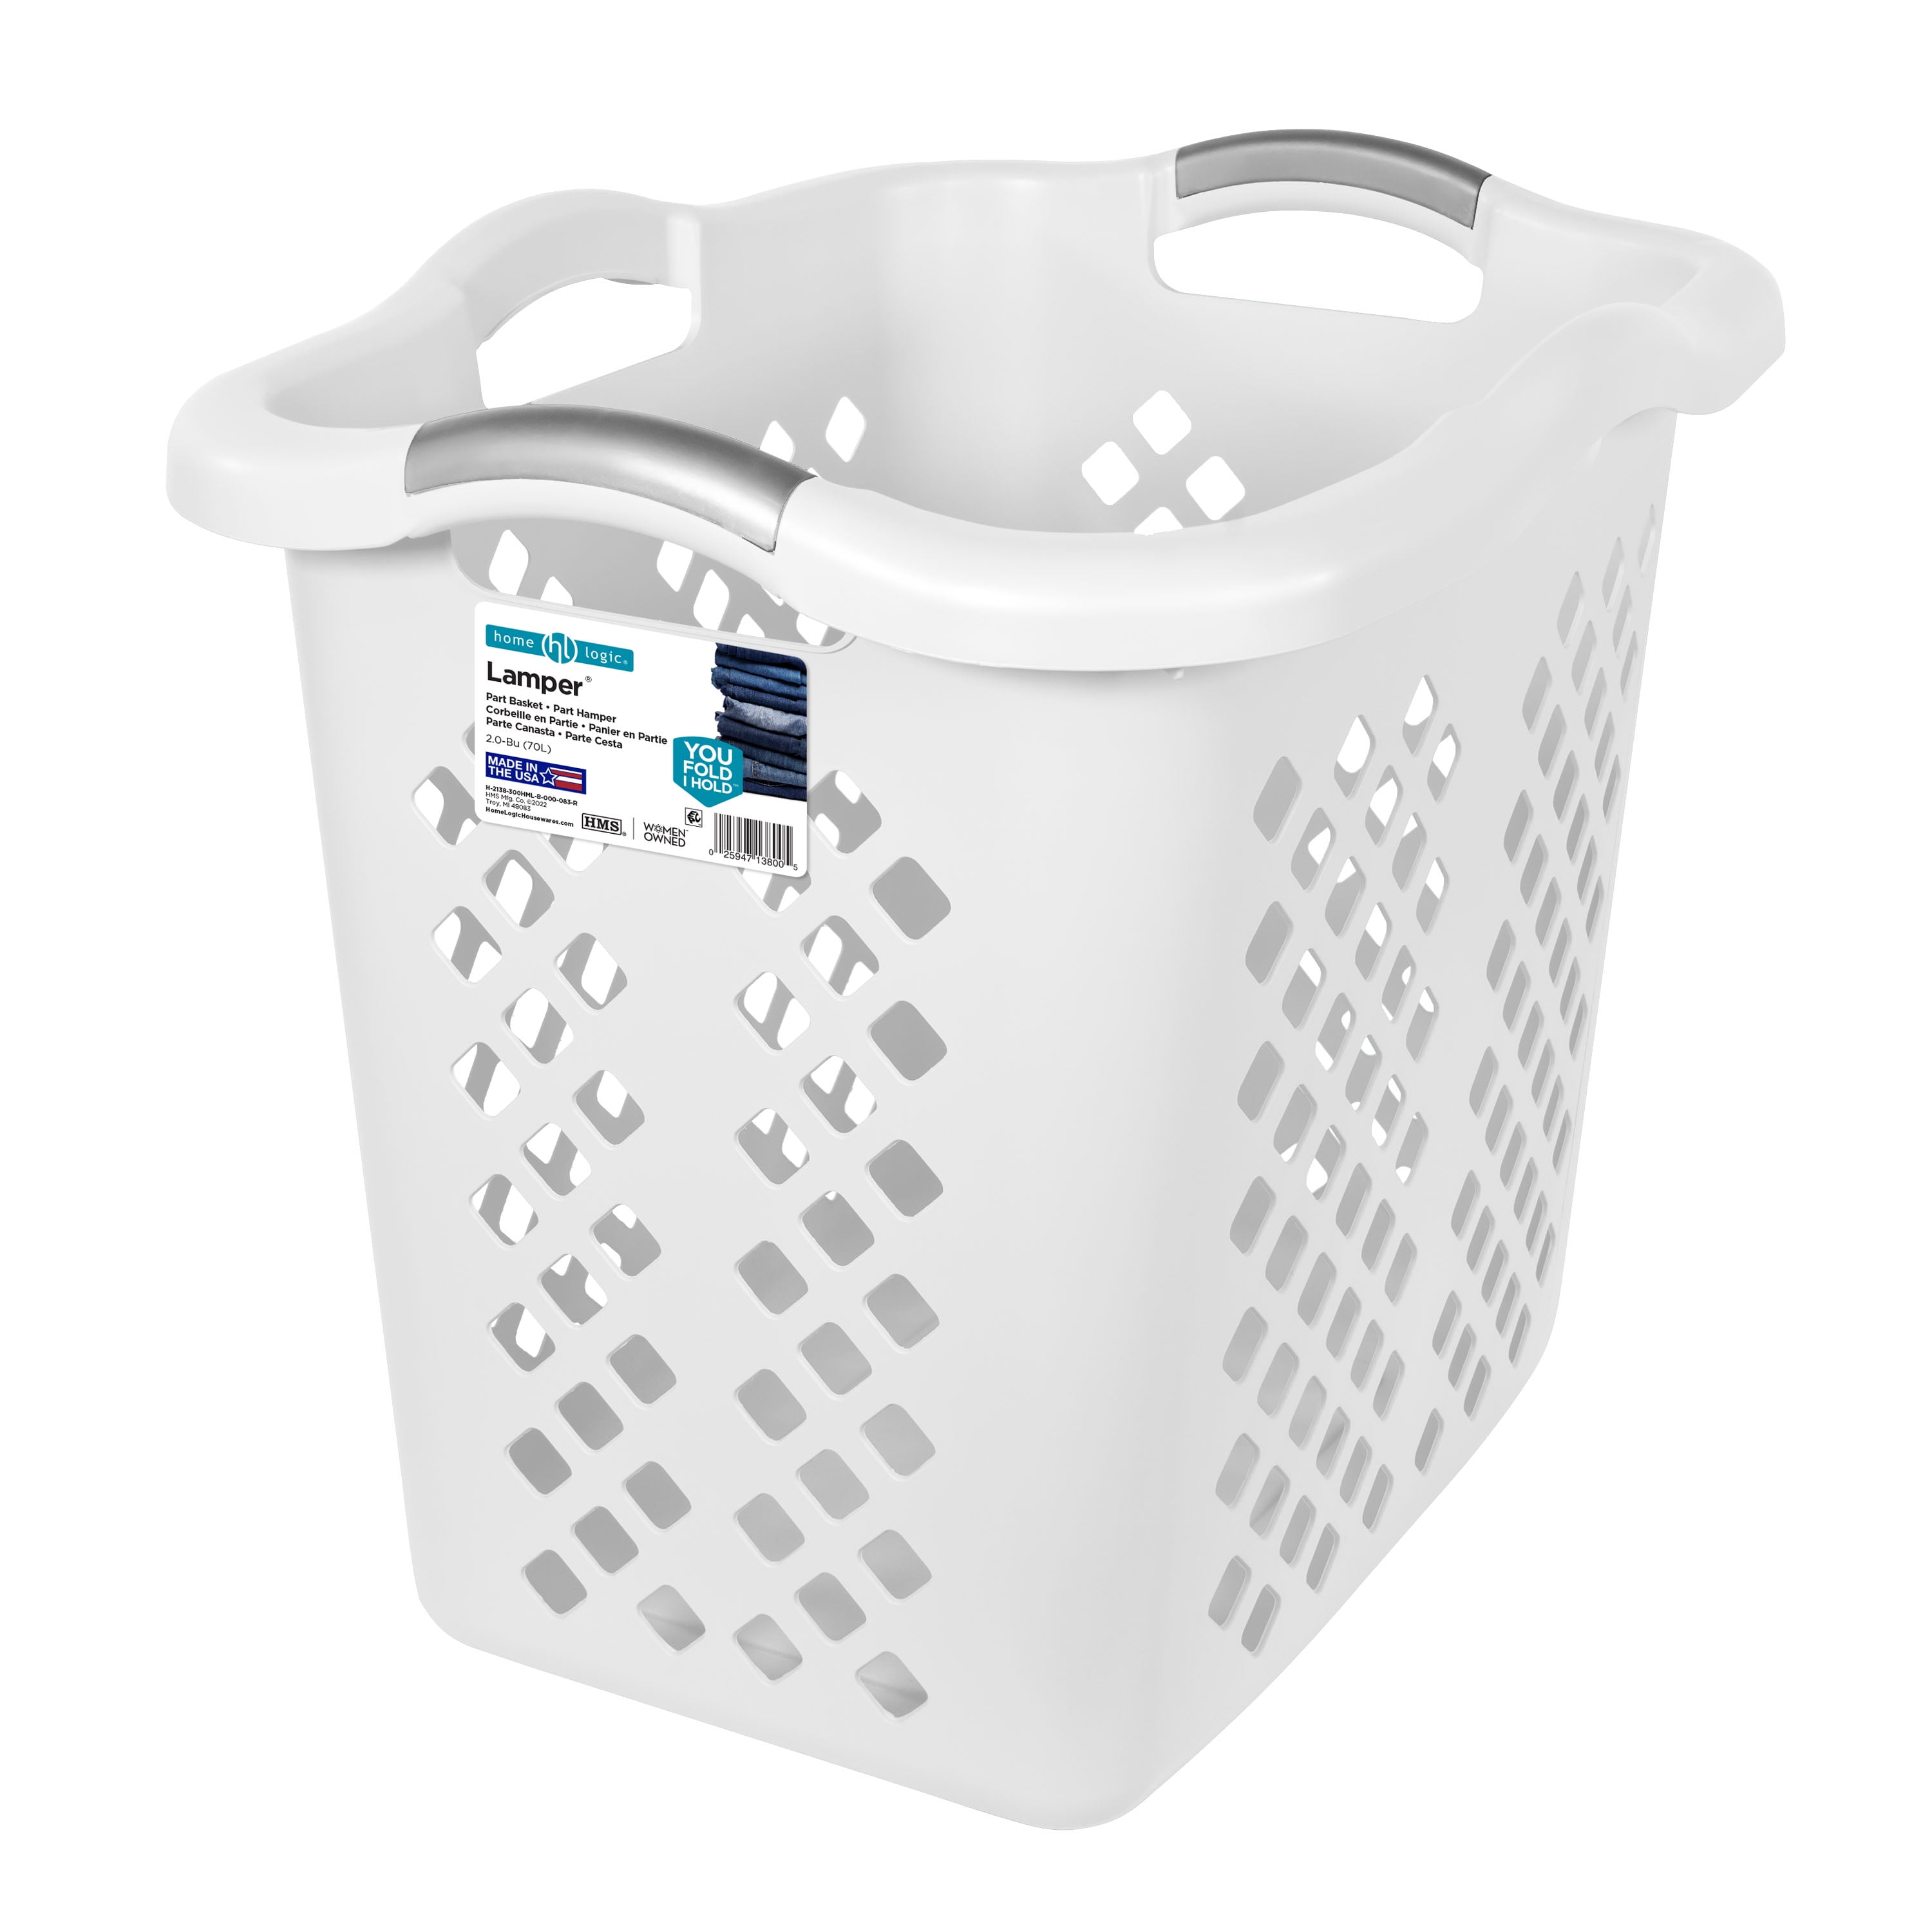  Thanksgiving Large Laundry Basket, Waterproof Laundry